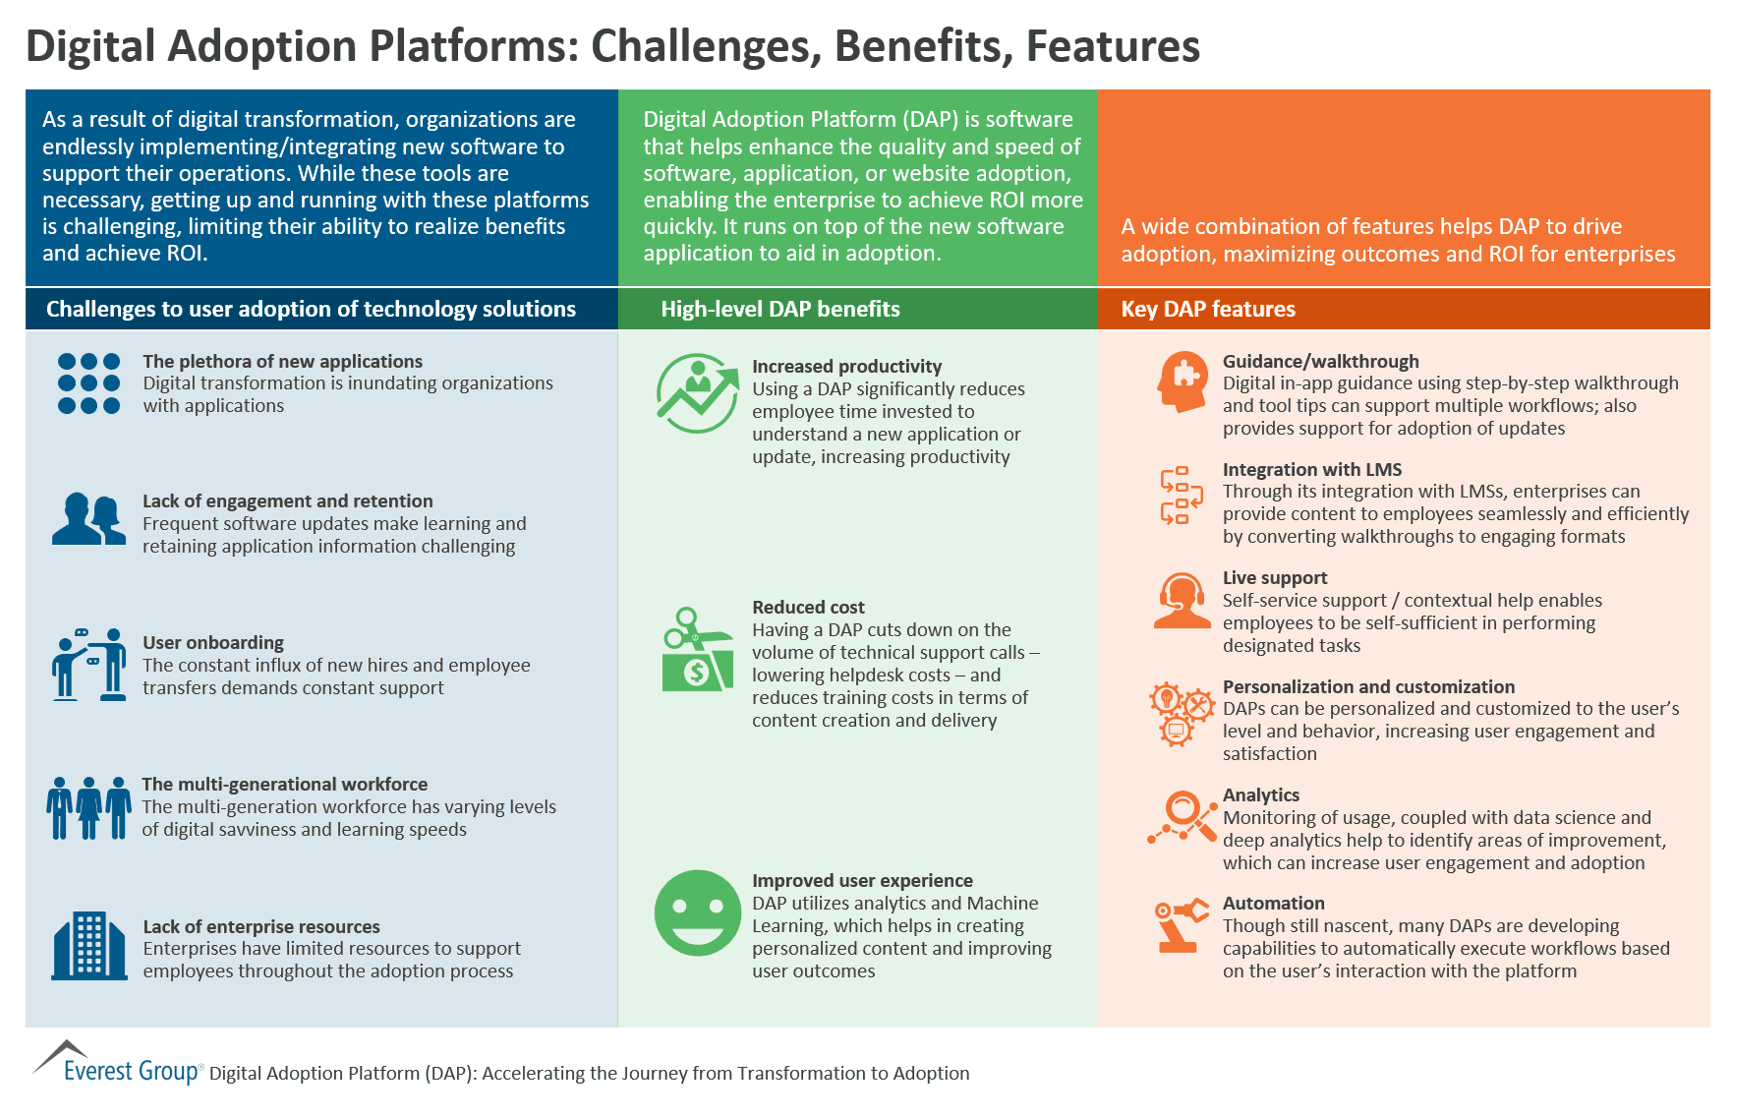 Digital Adoption Platforms - Challenges, Benefits, Features